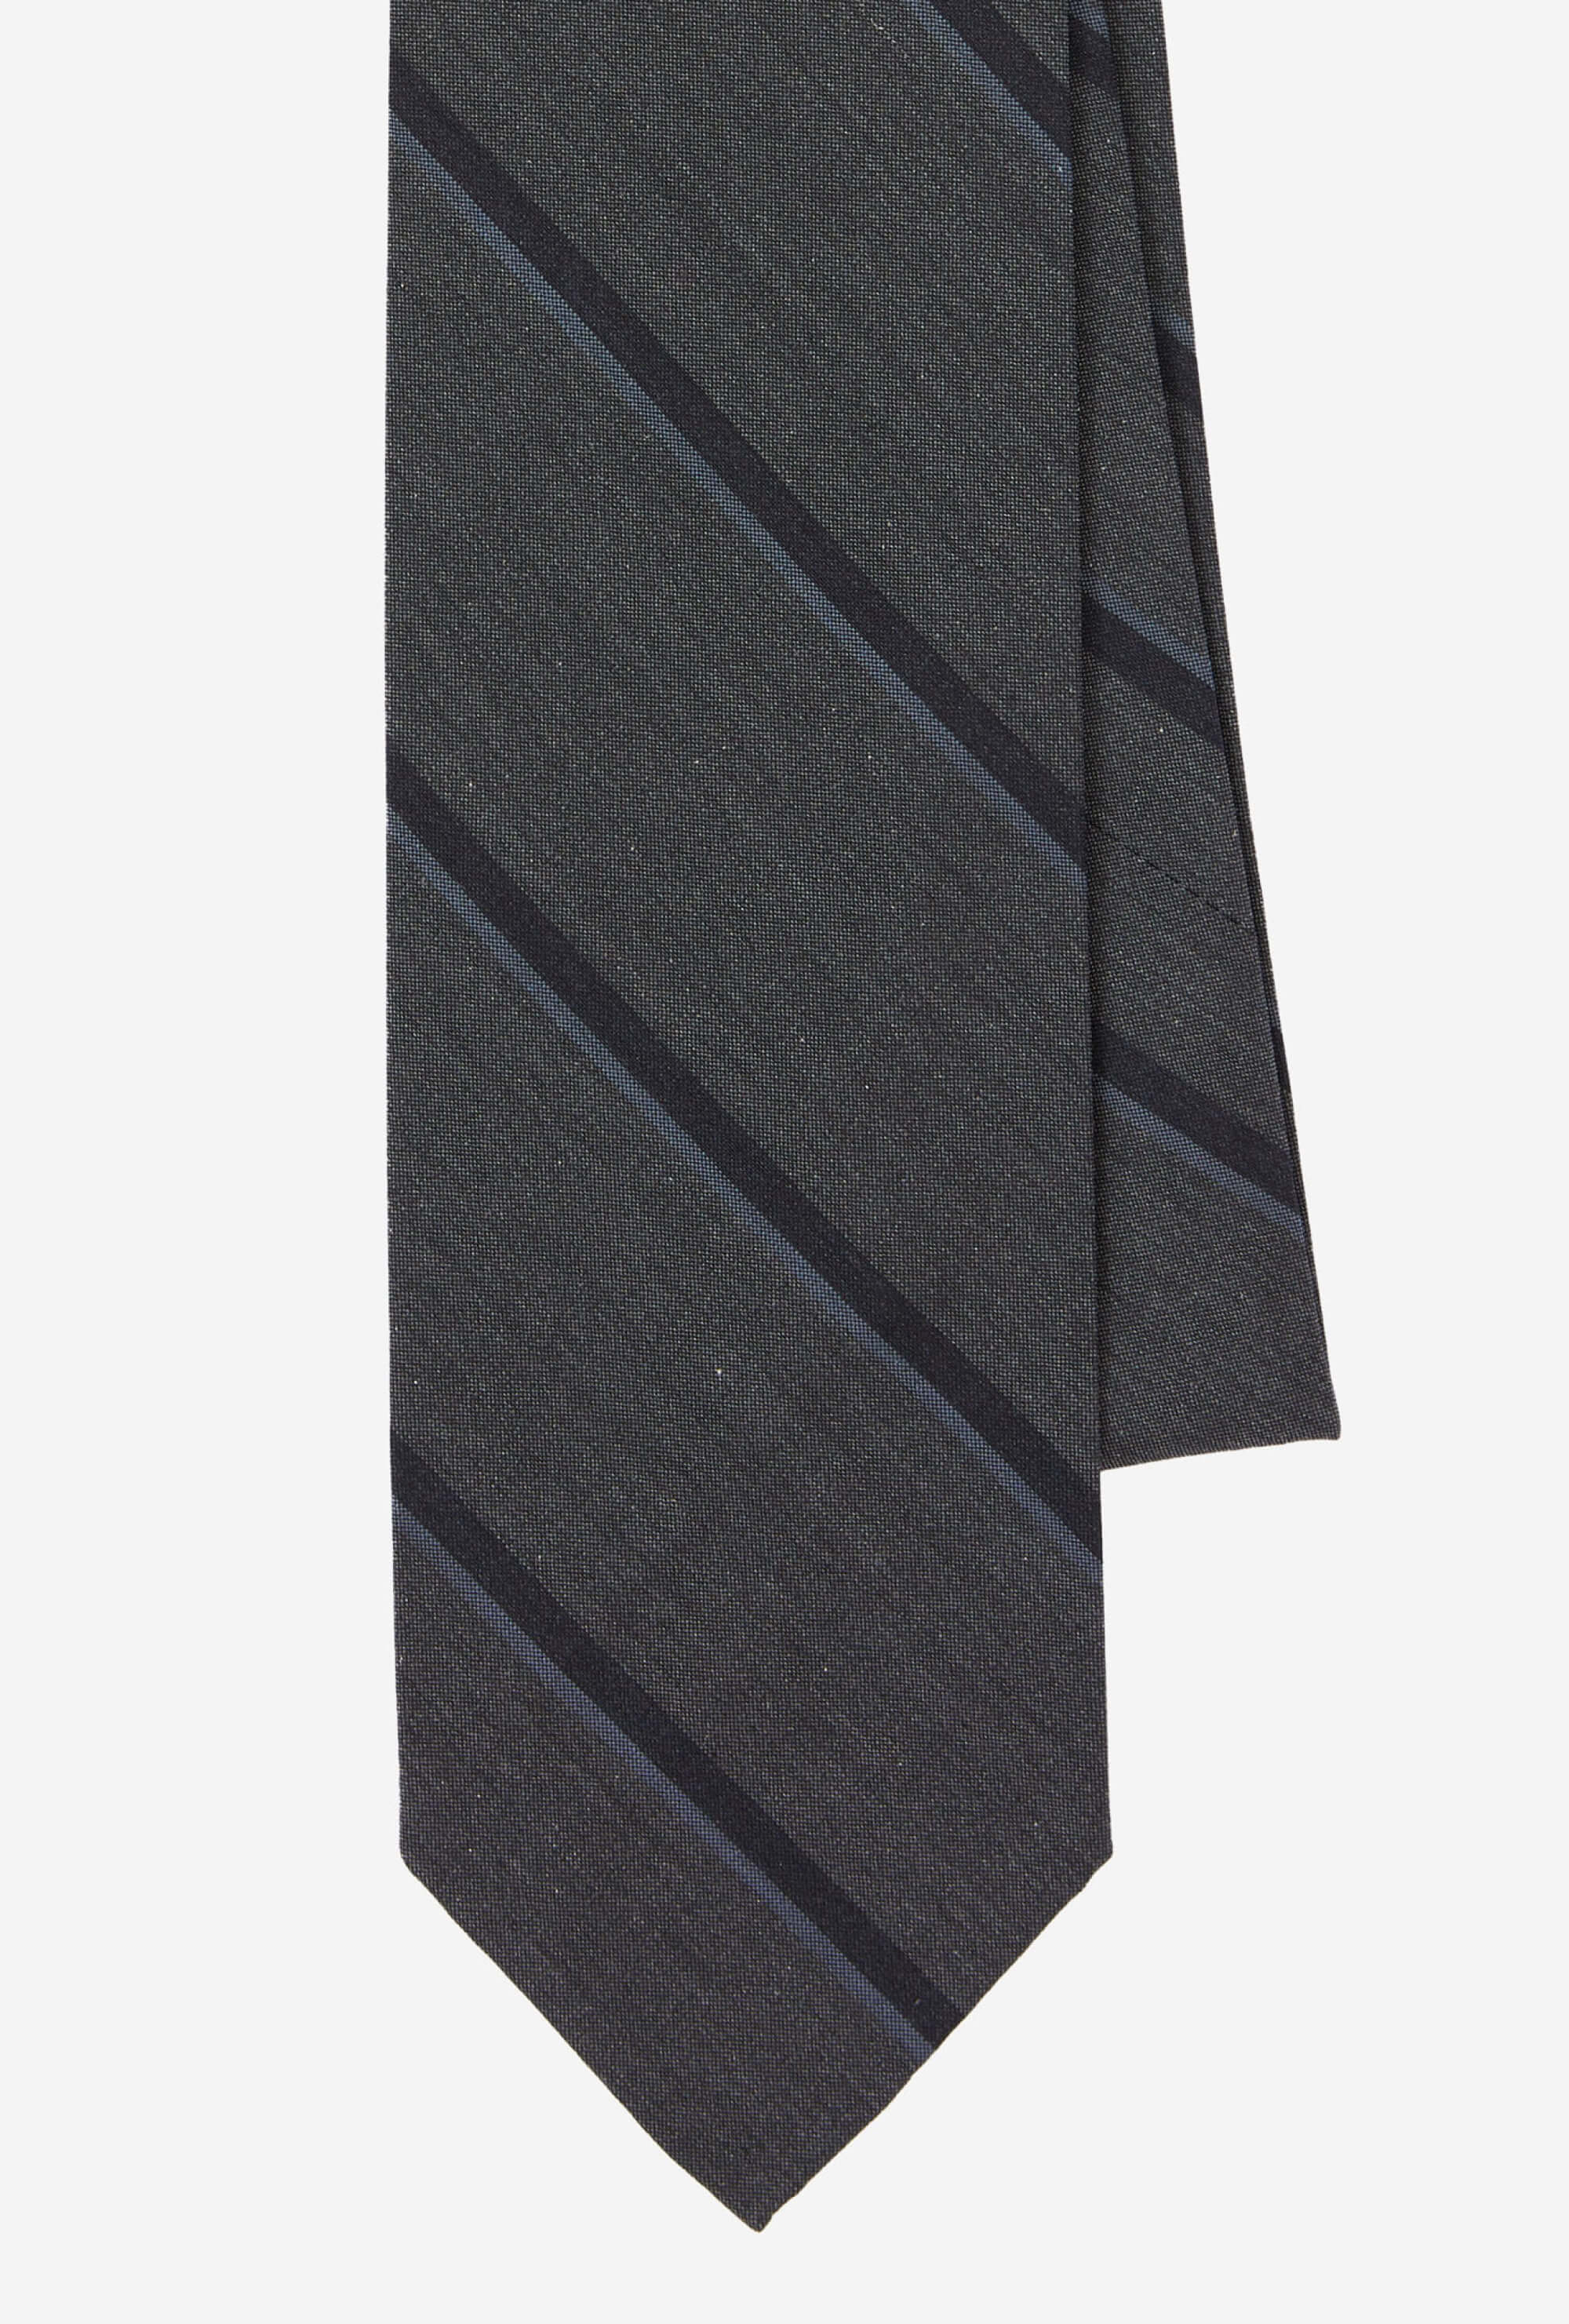 Dry Silk Tie Grey Navy Blue Stripe